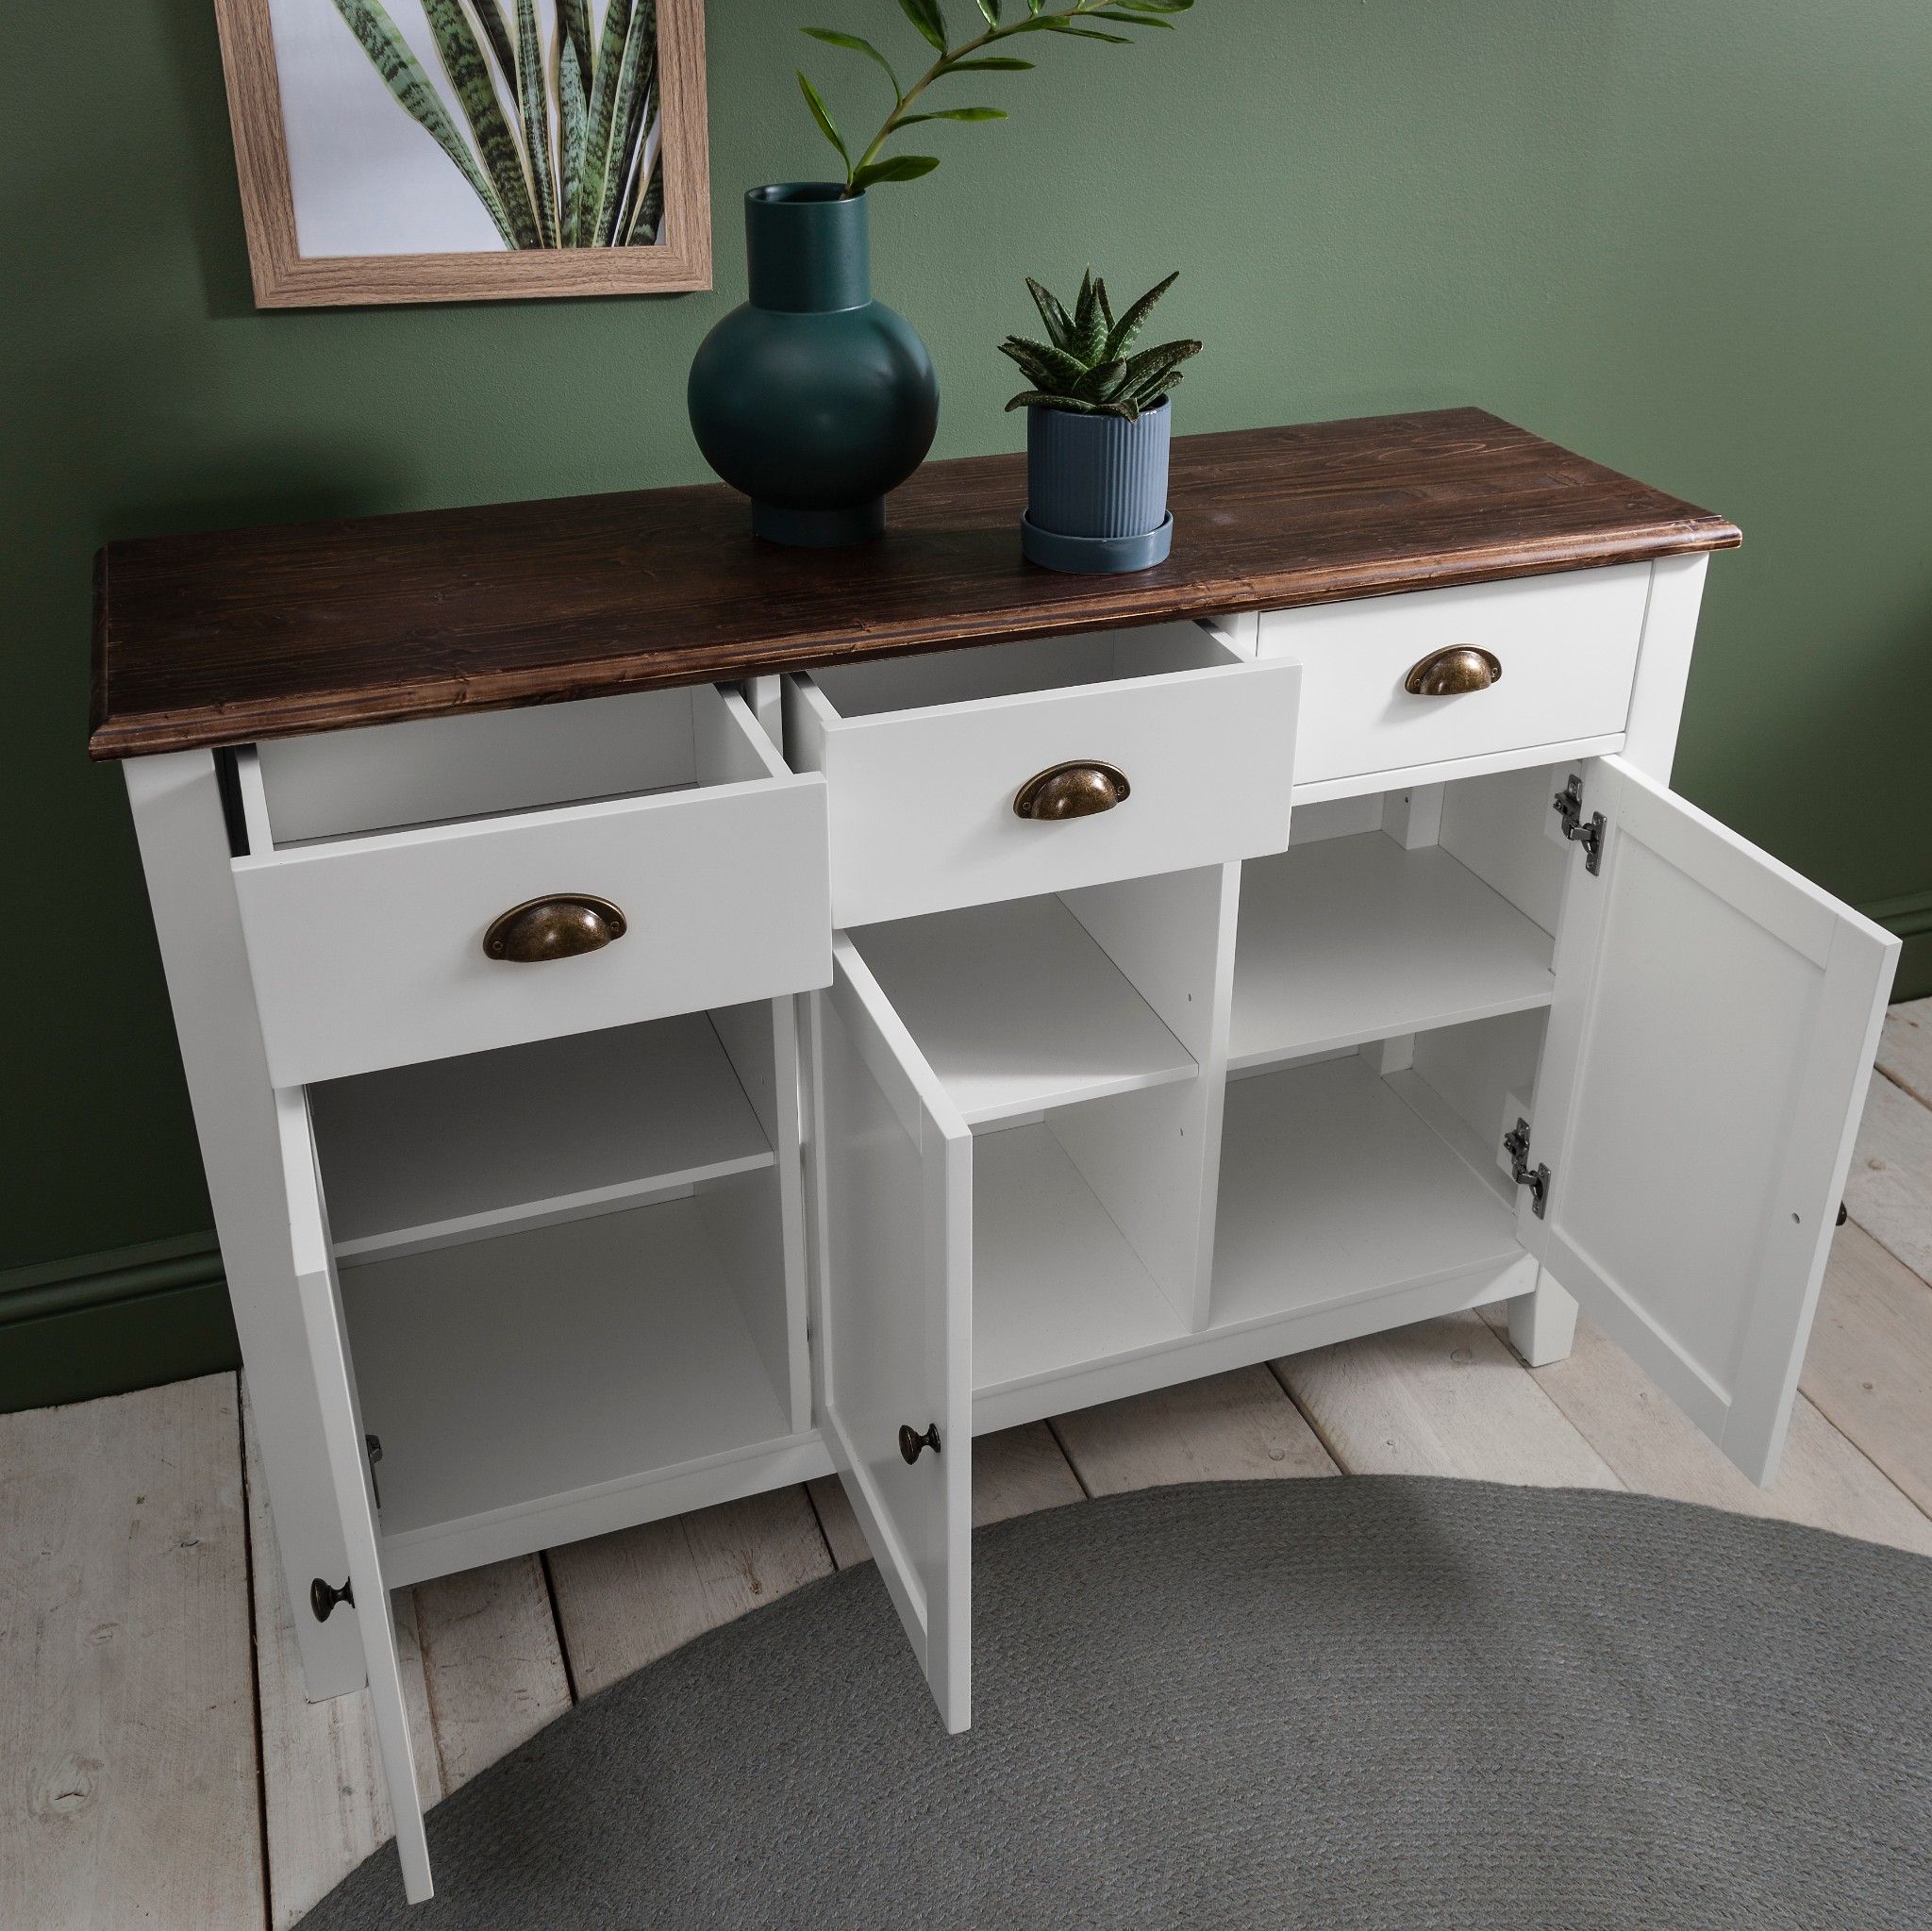 3 Drawer Sideboard Buffet White Grey Wooden | Ebay With Regard To Matte White 3 Drawer Wood Desks (View 15 of 15)